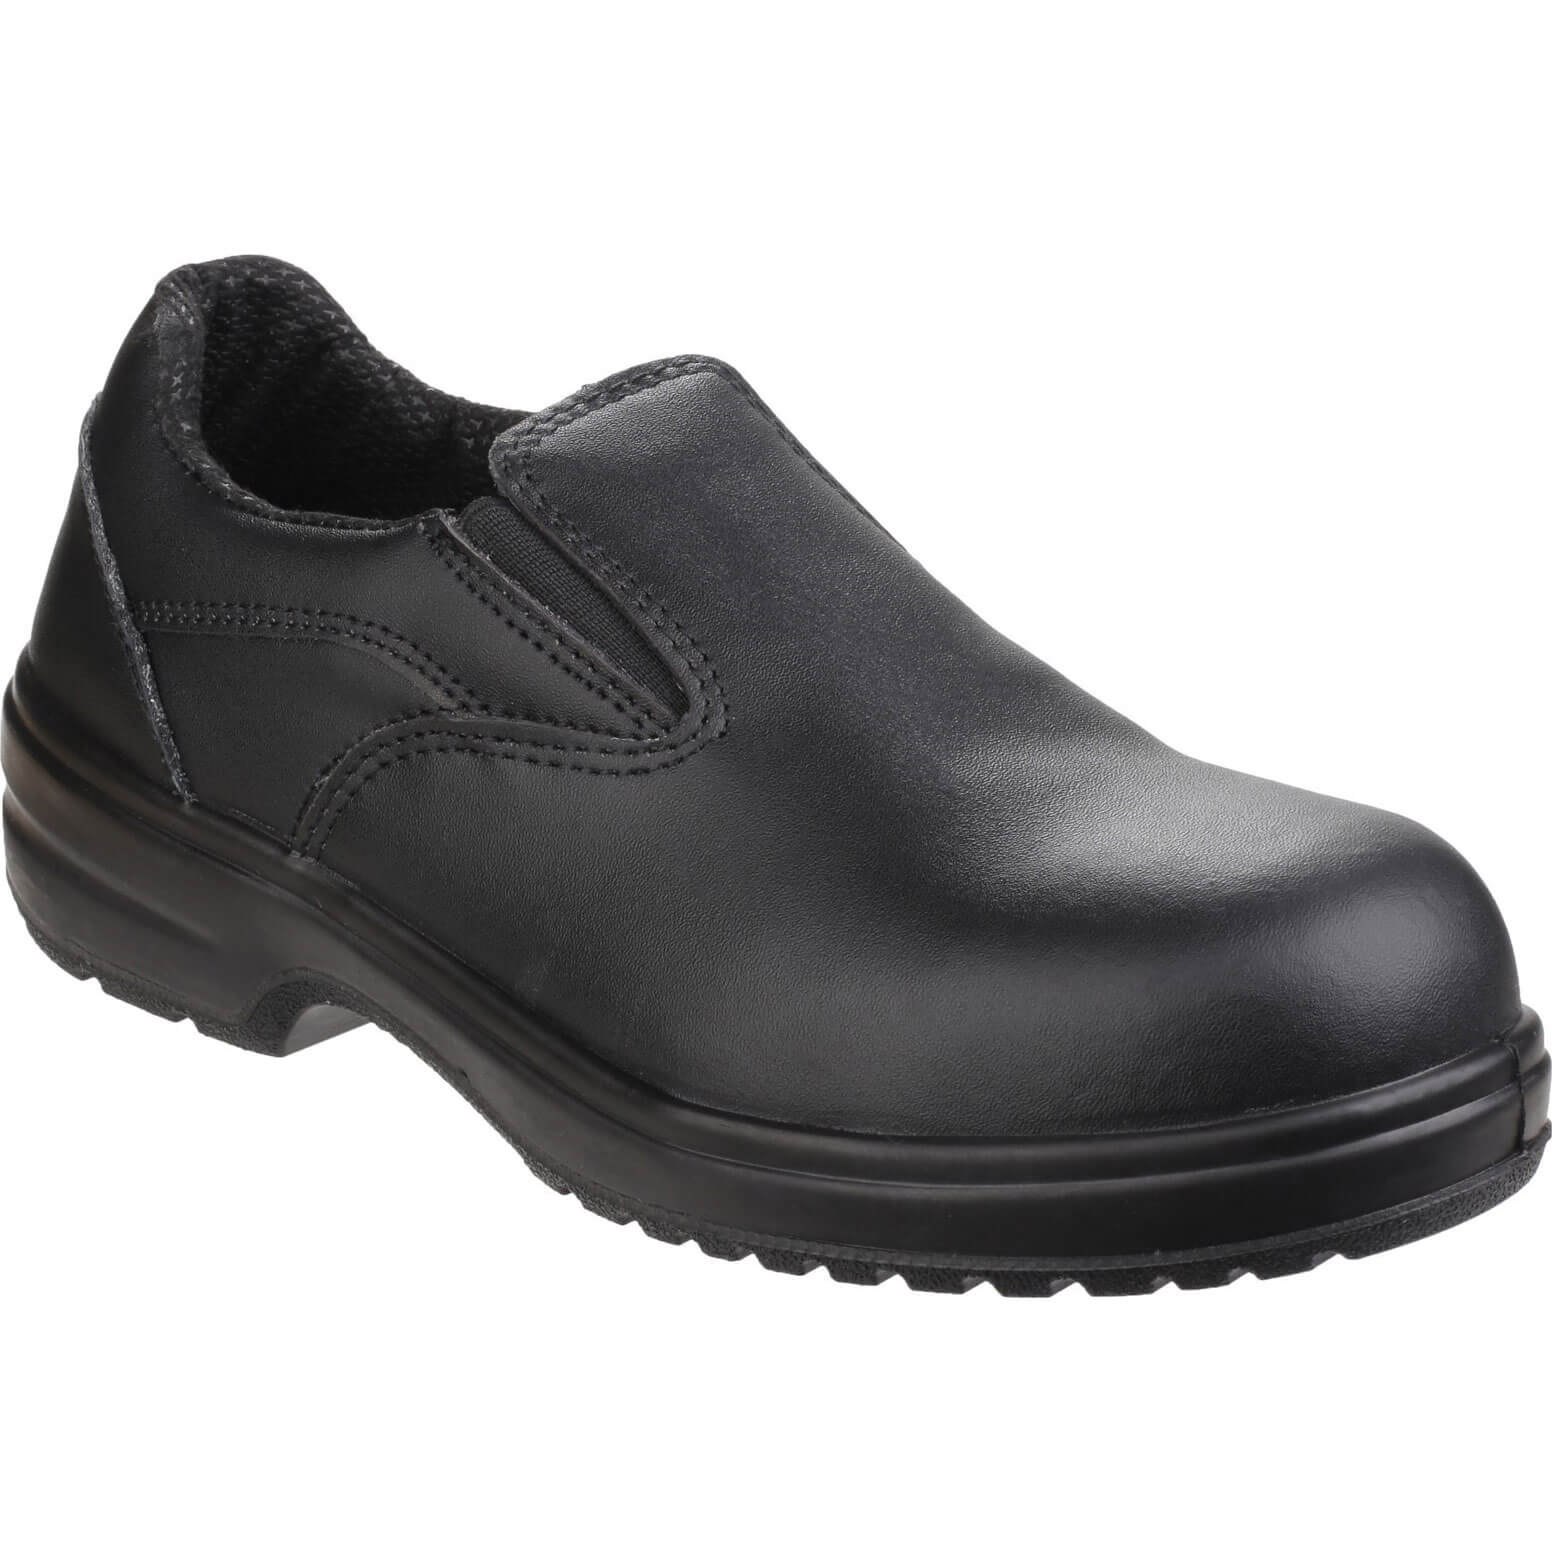 Photo of Amblers Safety Fs94c Lightweight Slip On Safety Shoe Black Size 3